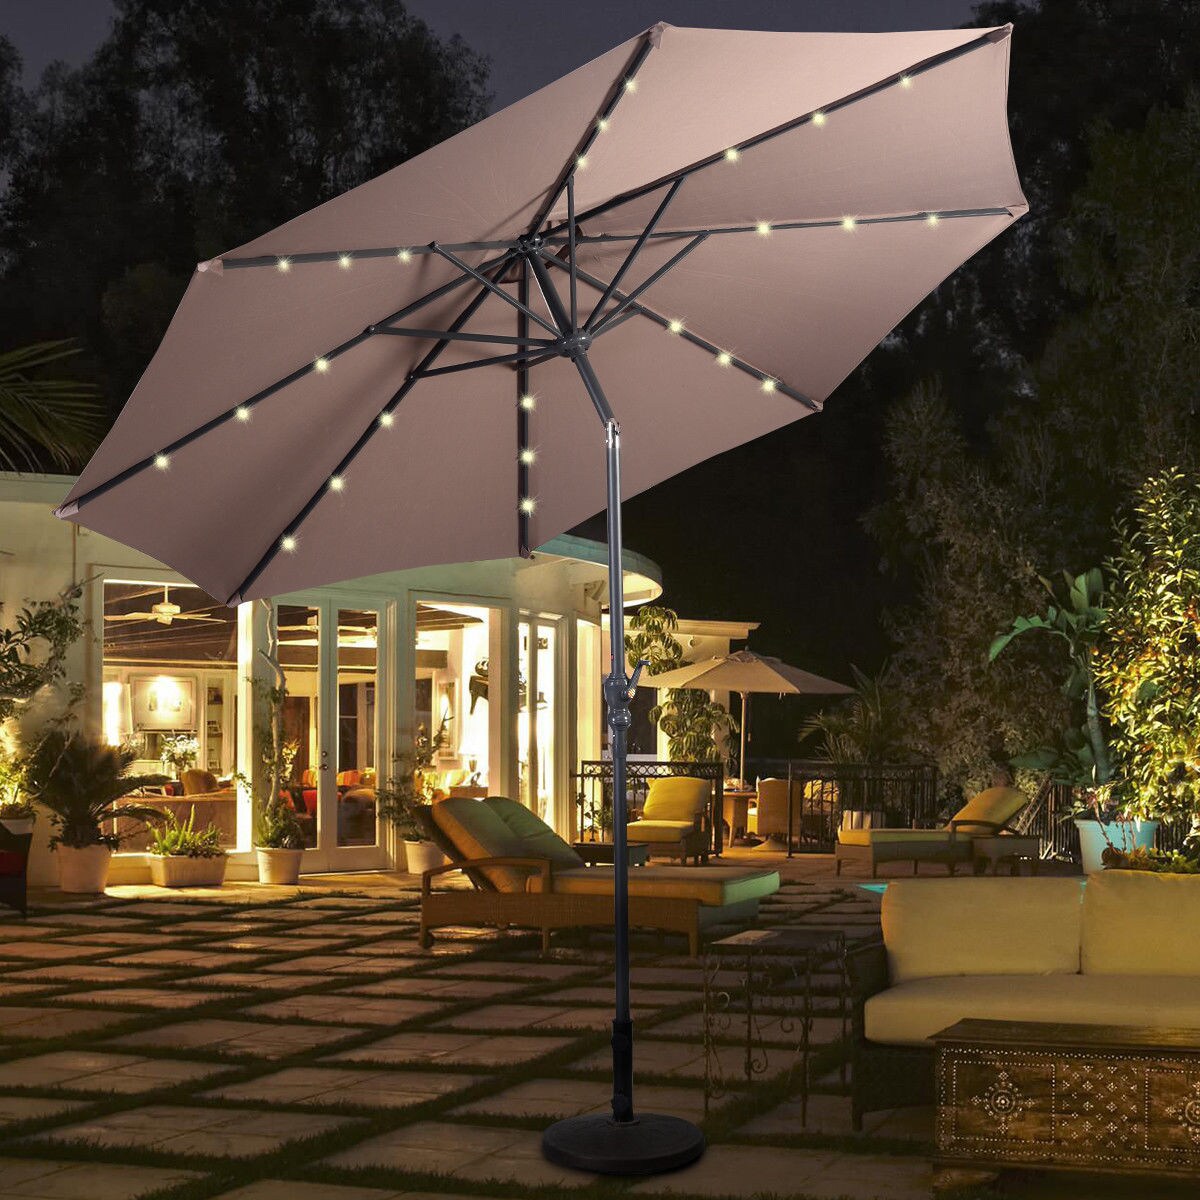 Costway 10ft Patio Solar Umbrella LED Patio Market Steel Tilt w/ Crank Outdoor (Tan)